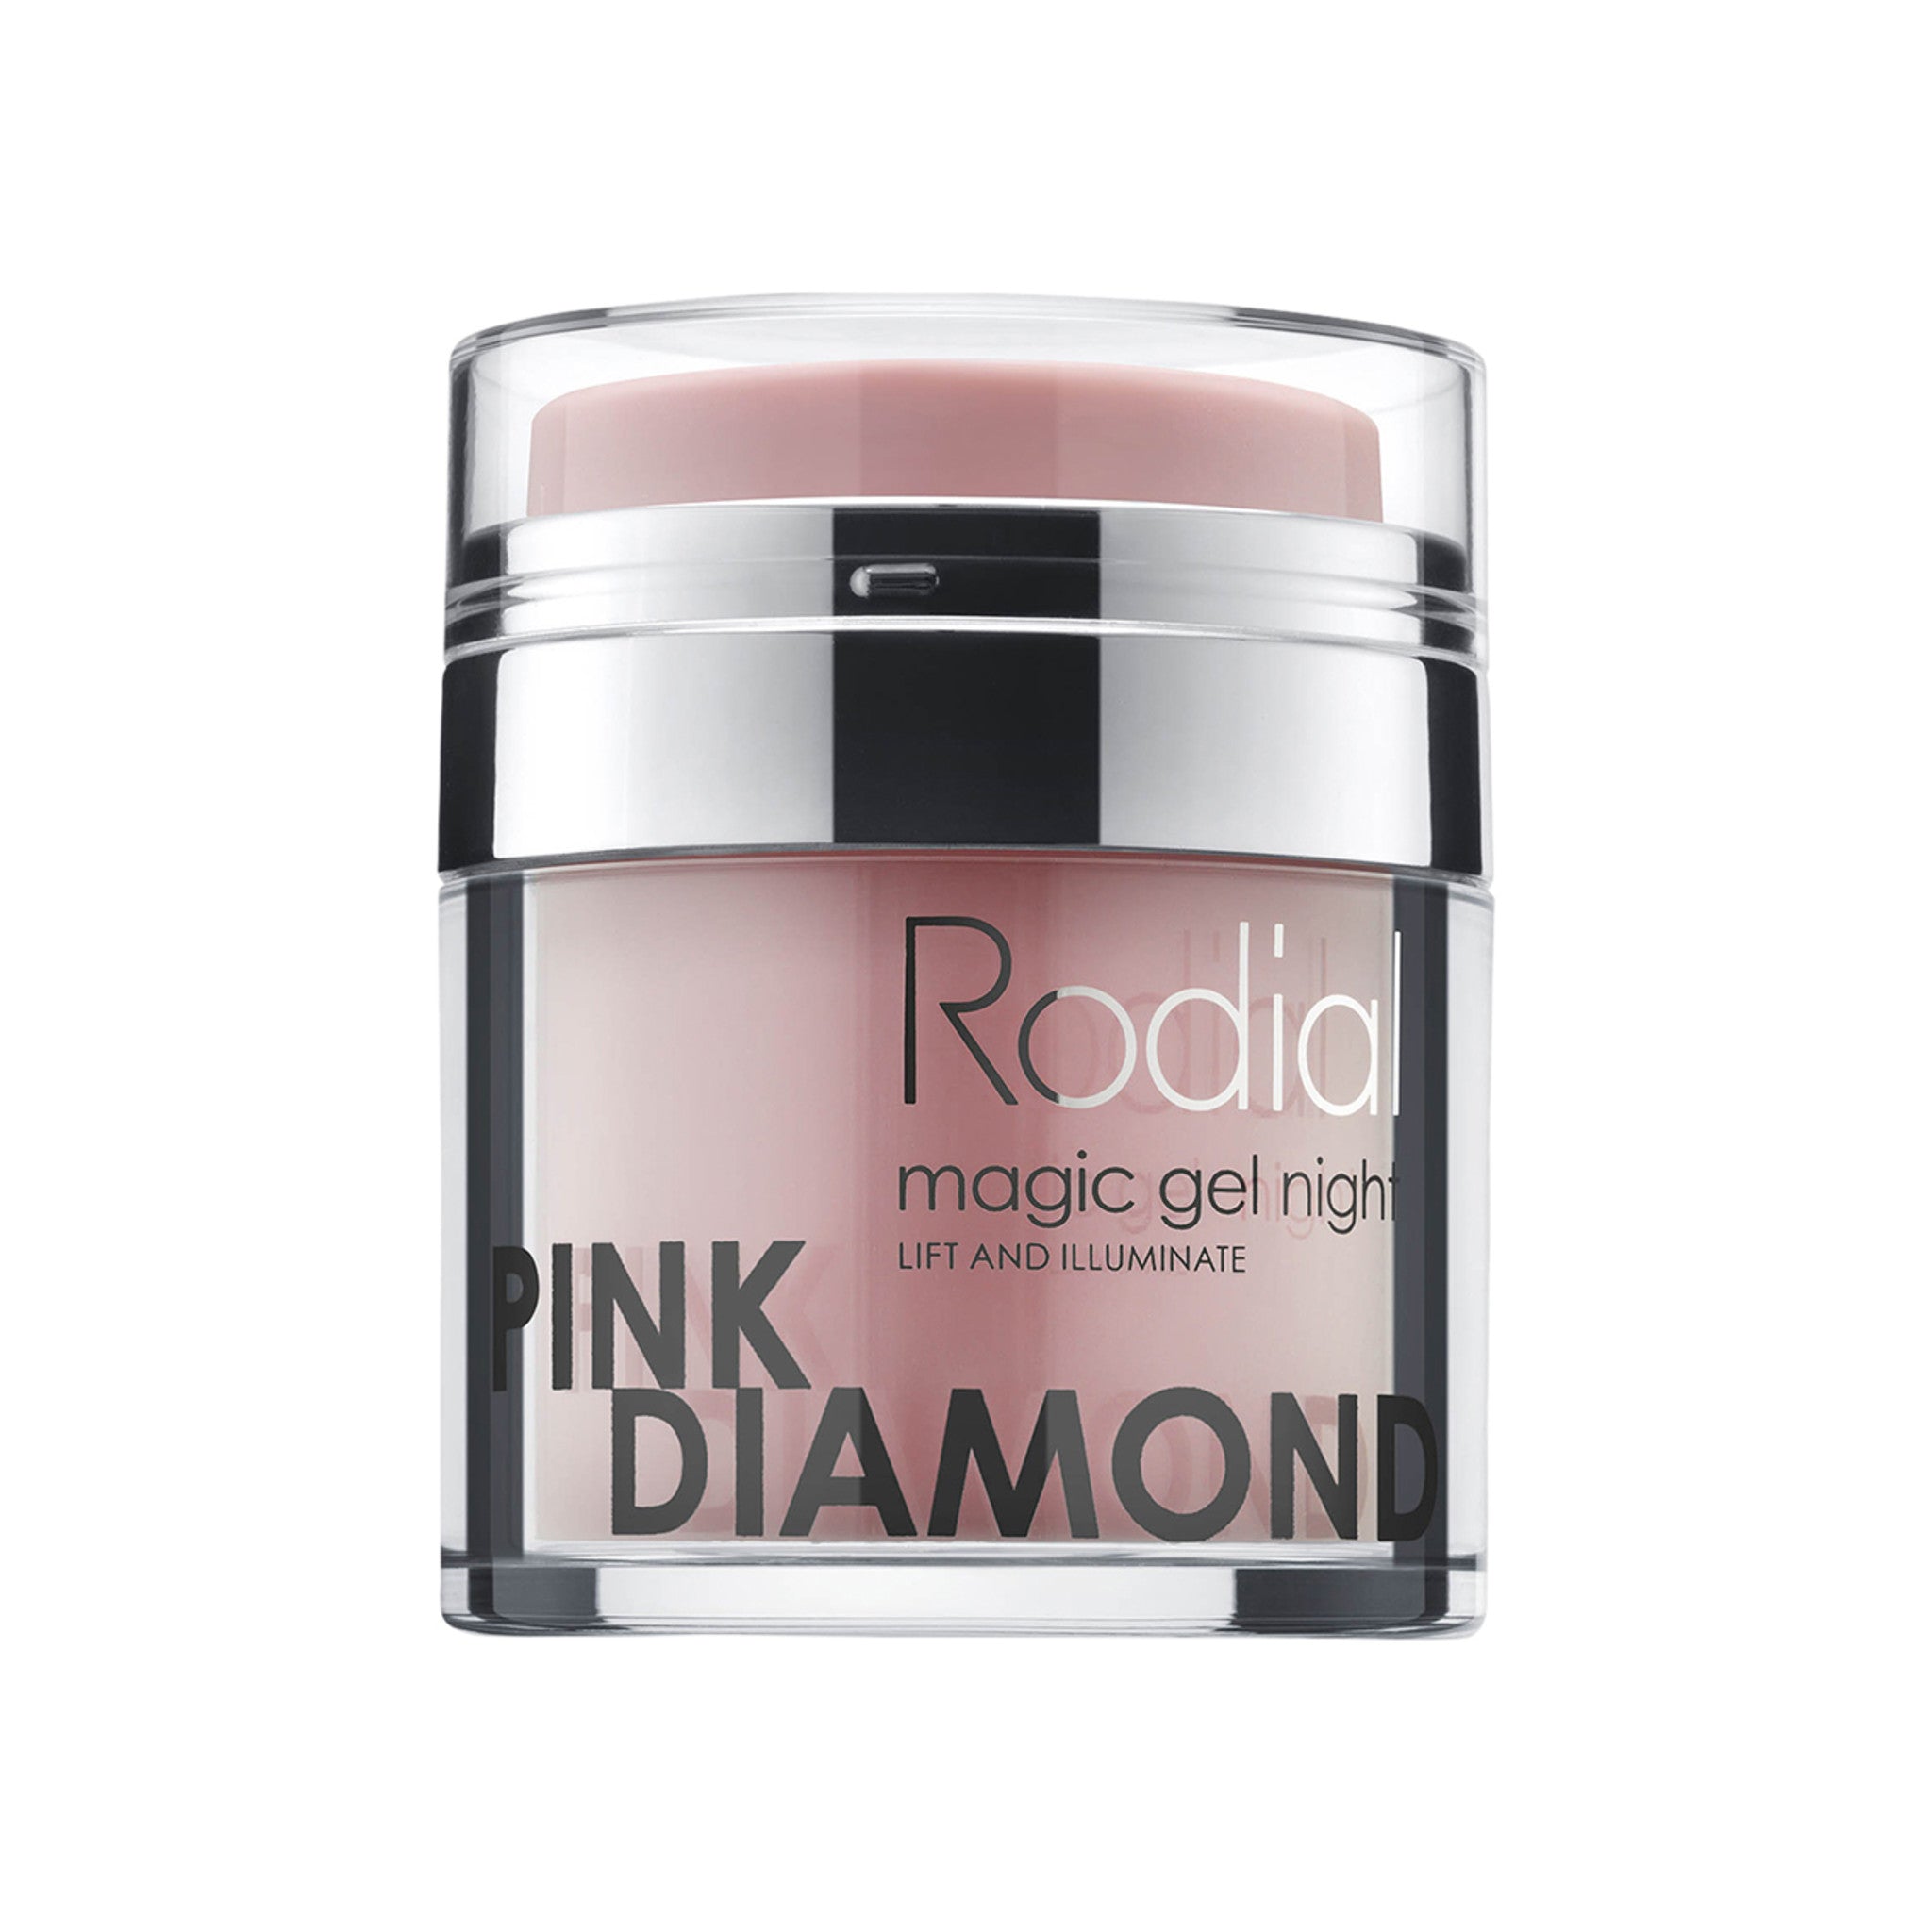 Rodial Pink Diamond Magic Gel Night main image.